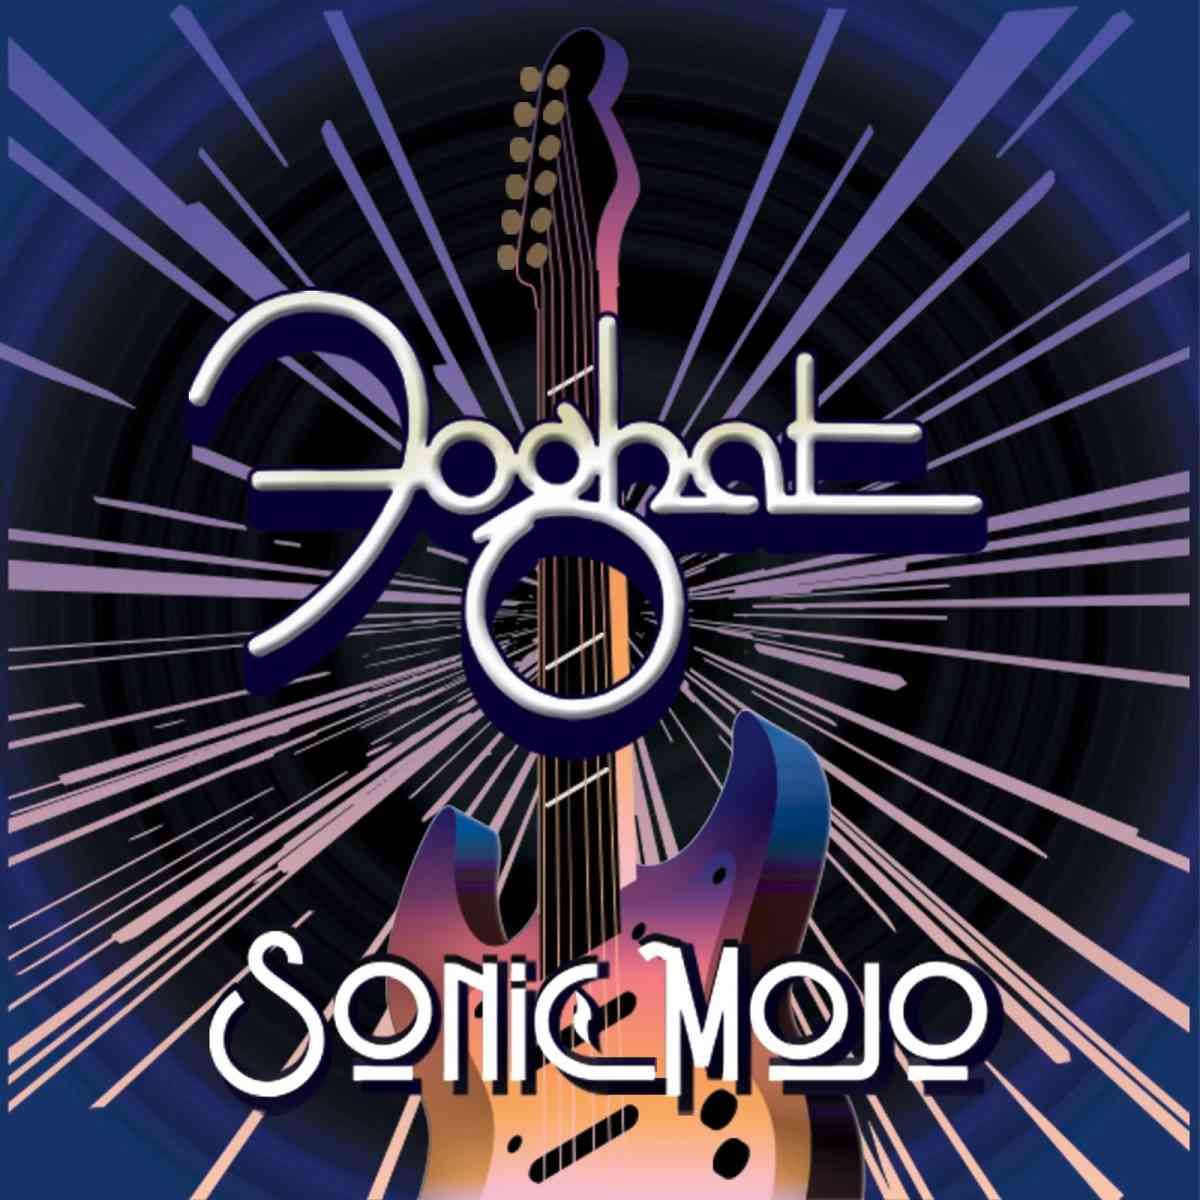 Foghat - Sonic Mojo - album cover